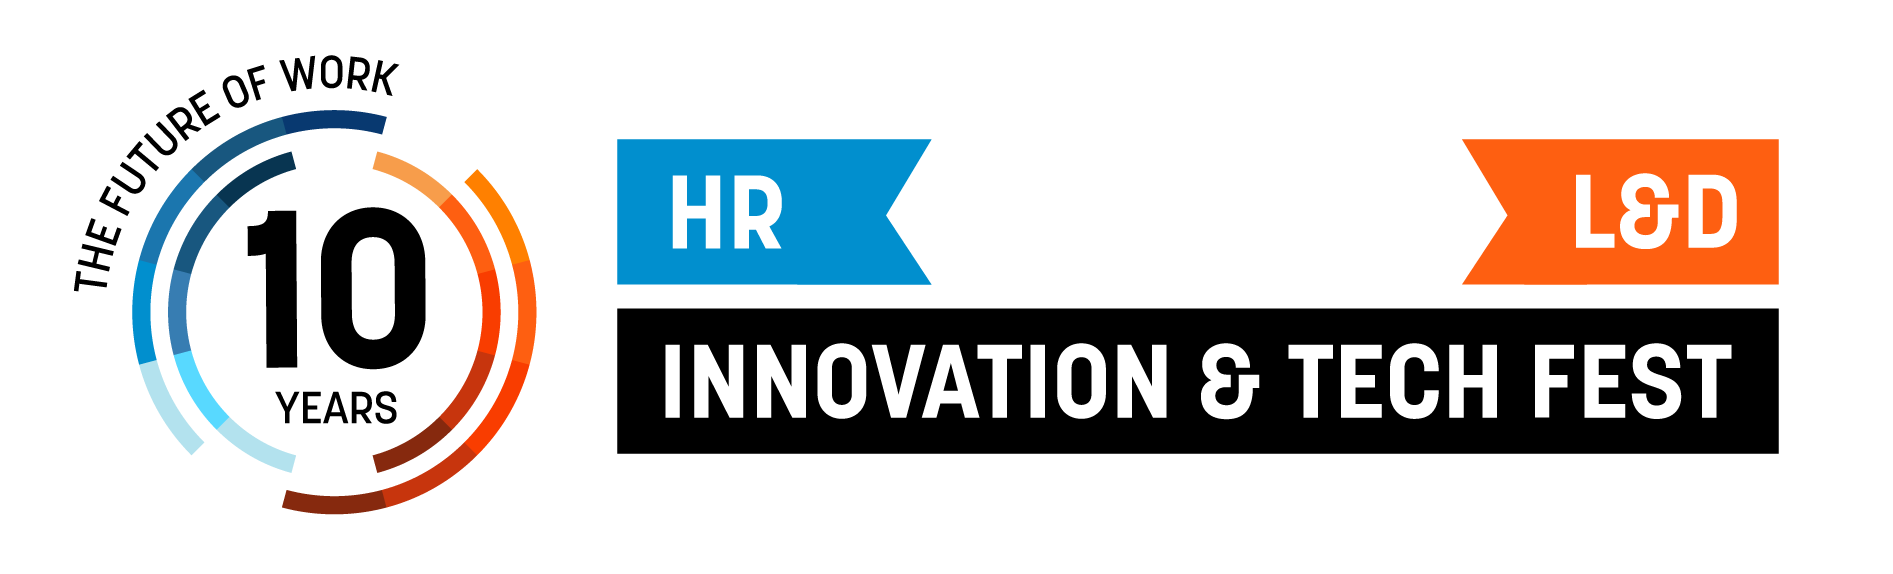 HR Innovation & Tech Fest